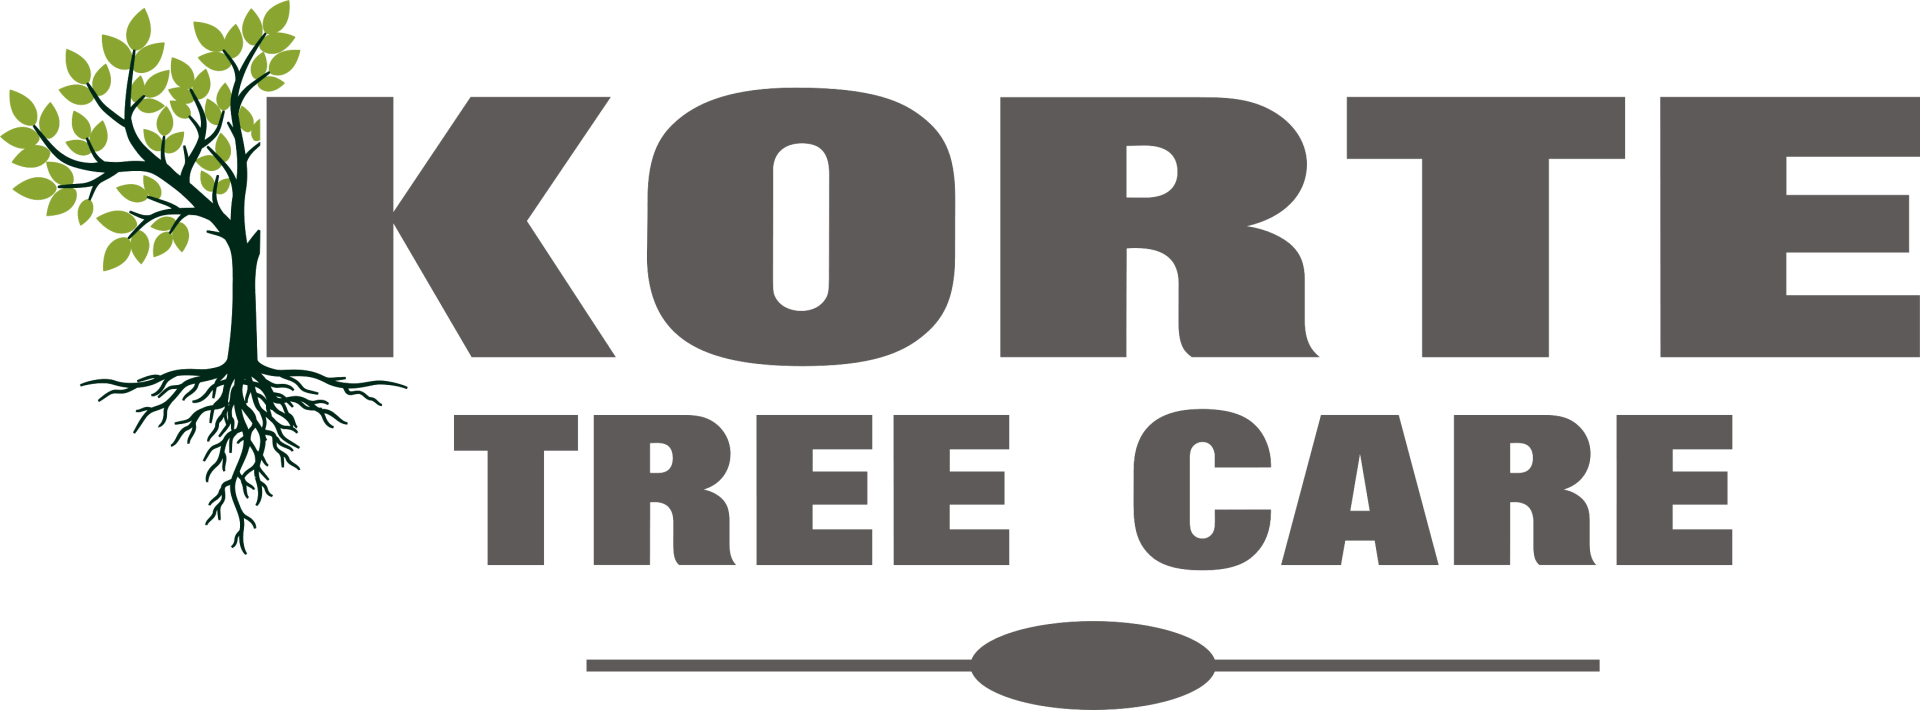 korte tree care logo